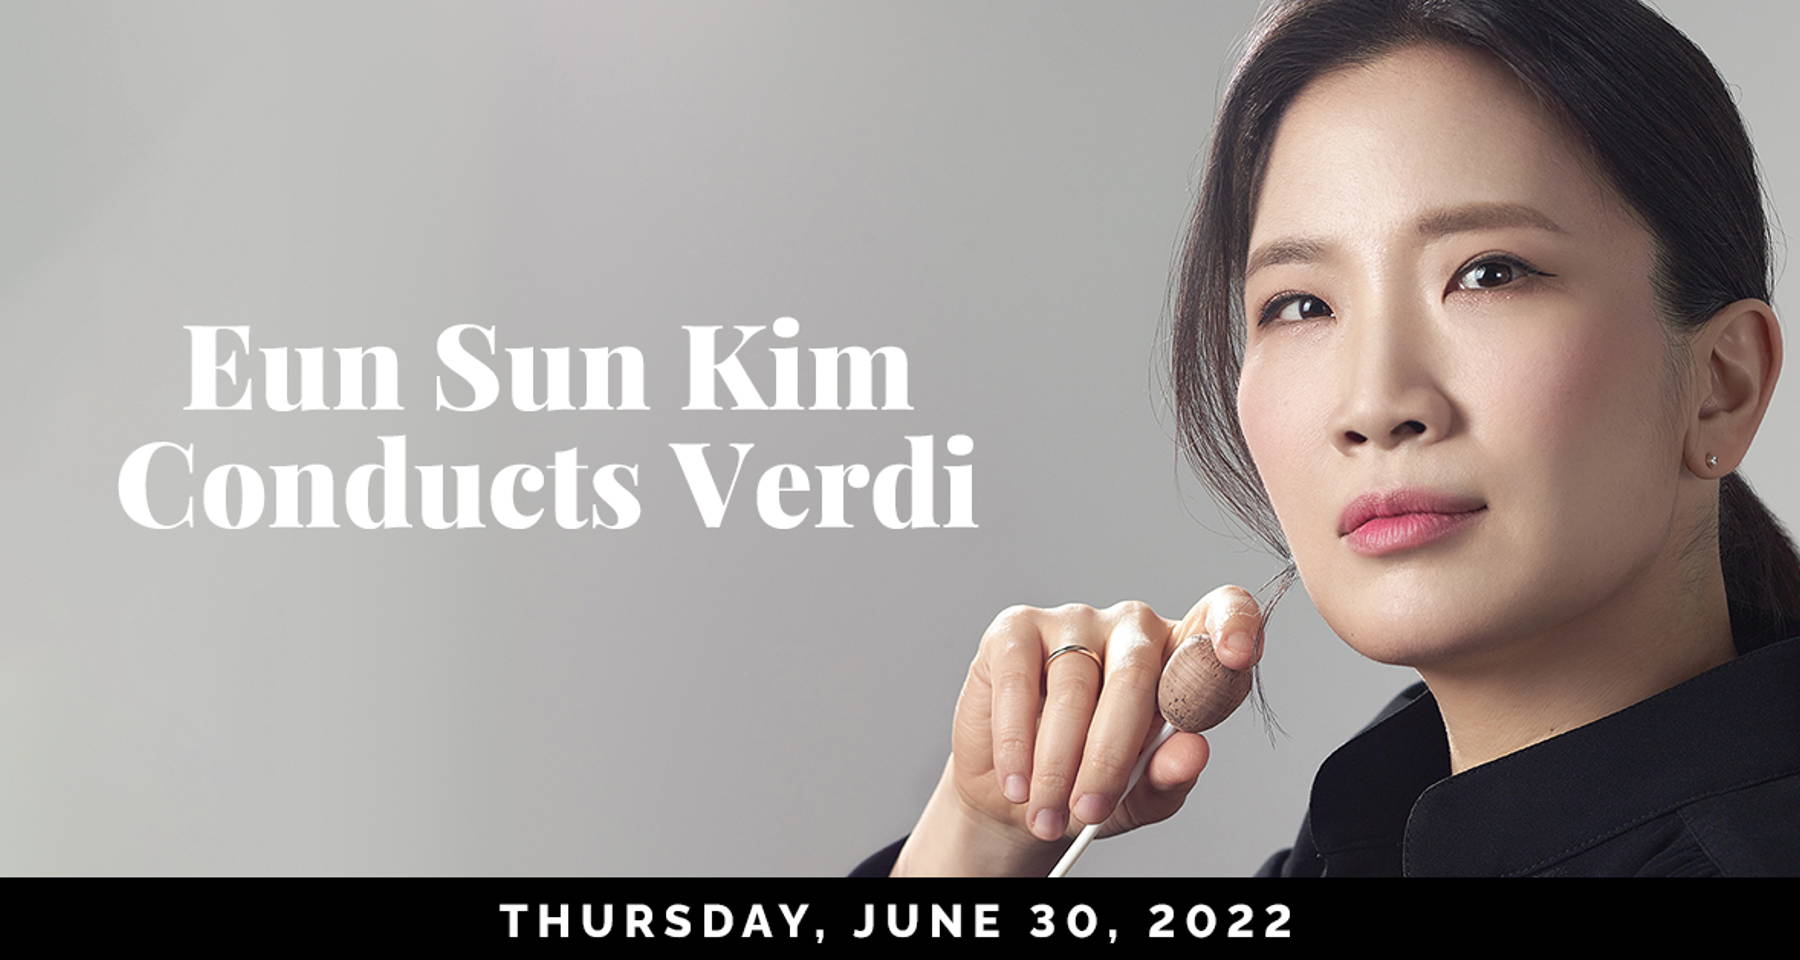 SF Opera: Eun Sun Kim Conducts Verdi